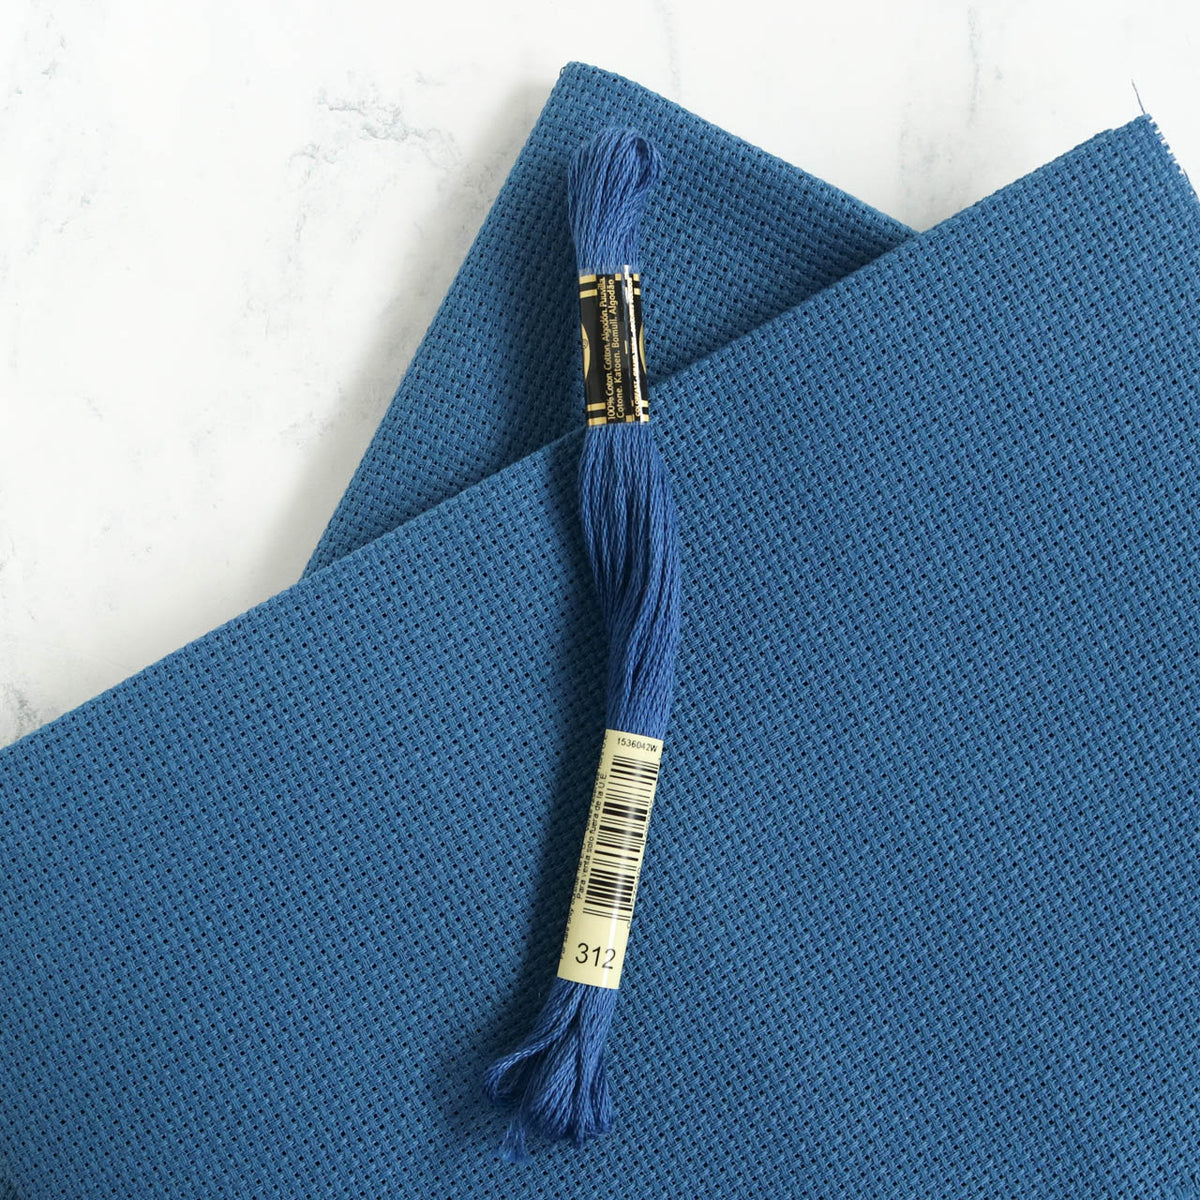  14CT Aida Cloth Embroidery Cross Stitch Fabric, Blue Collection  (W29″ x L39″, Sky Blue)